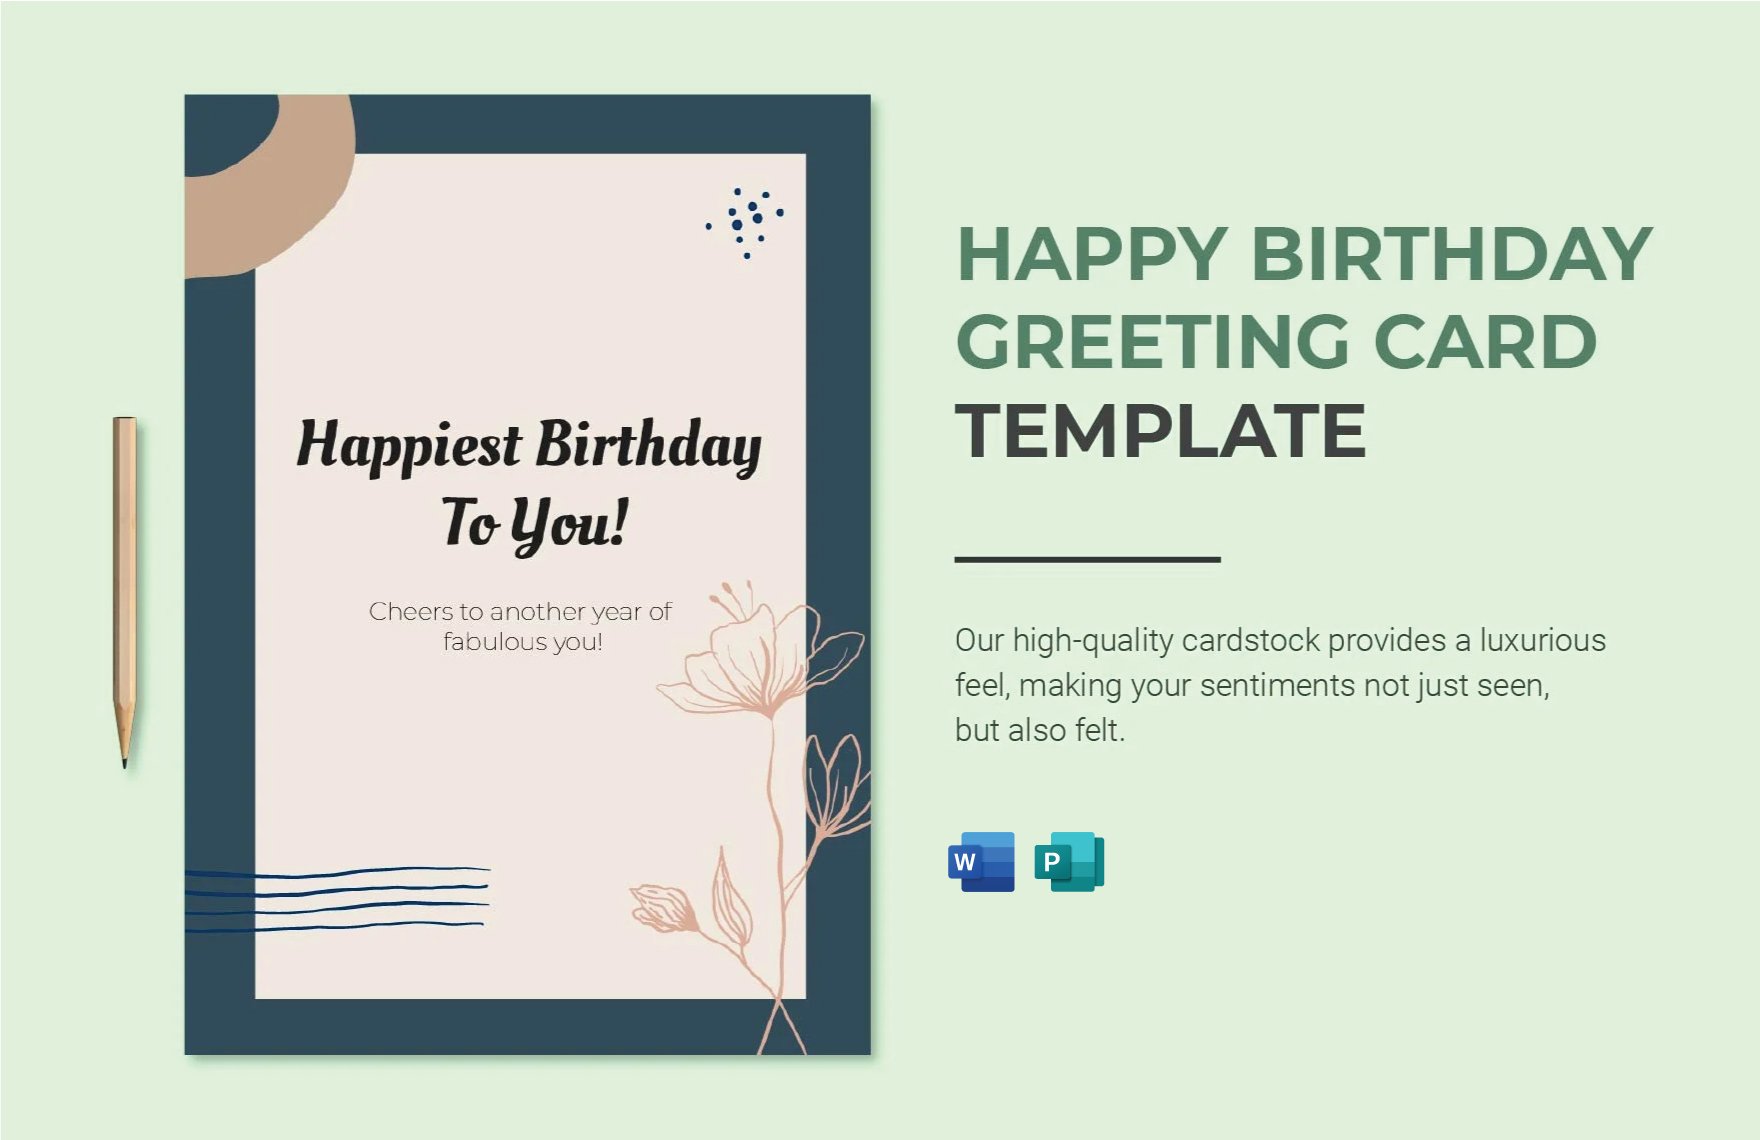 Happy Birthday Greeting Card Template